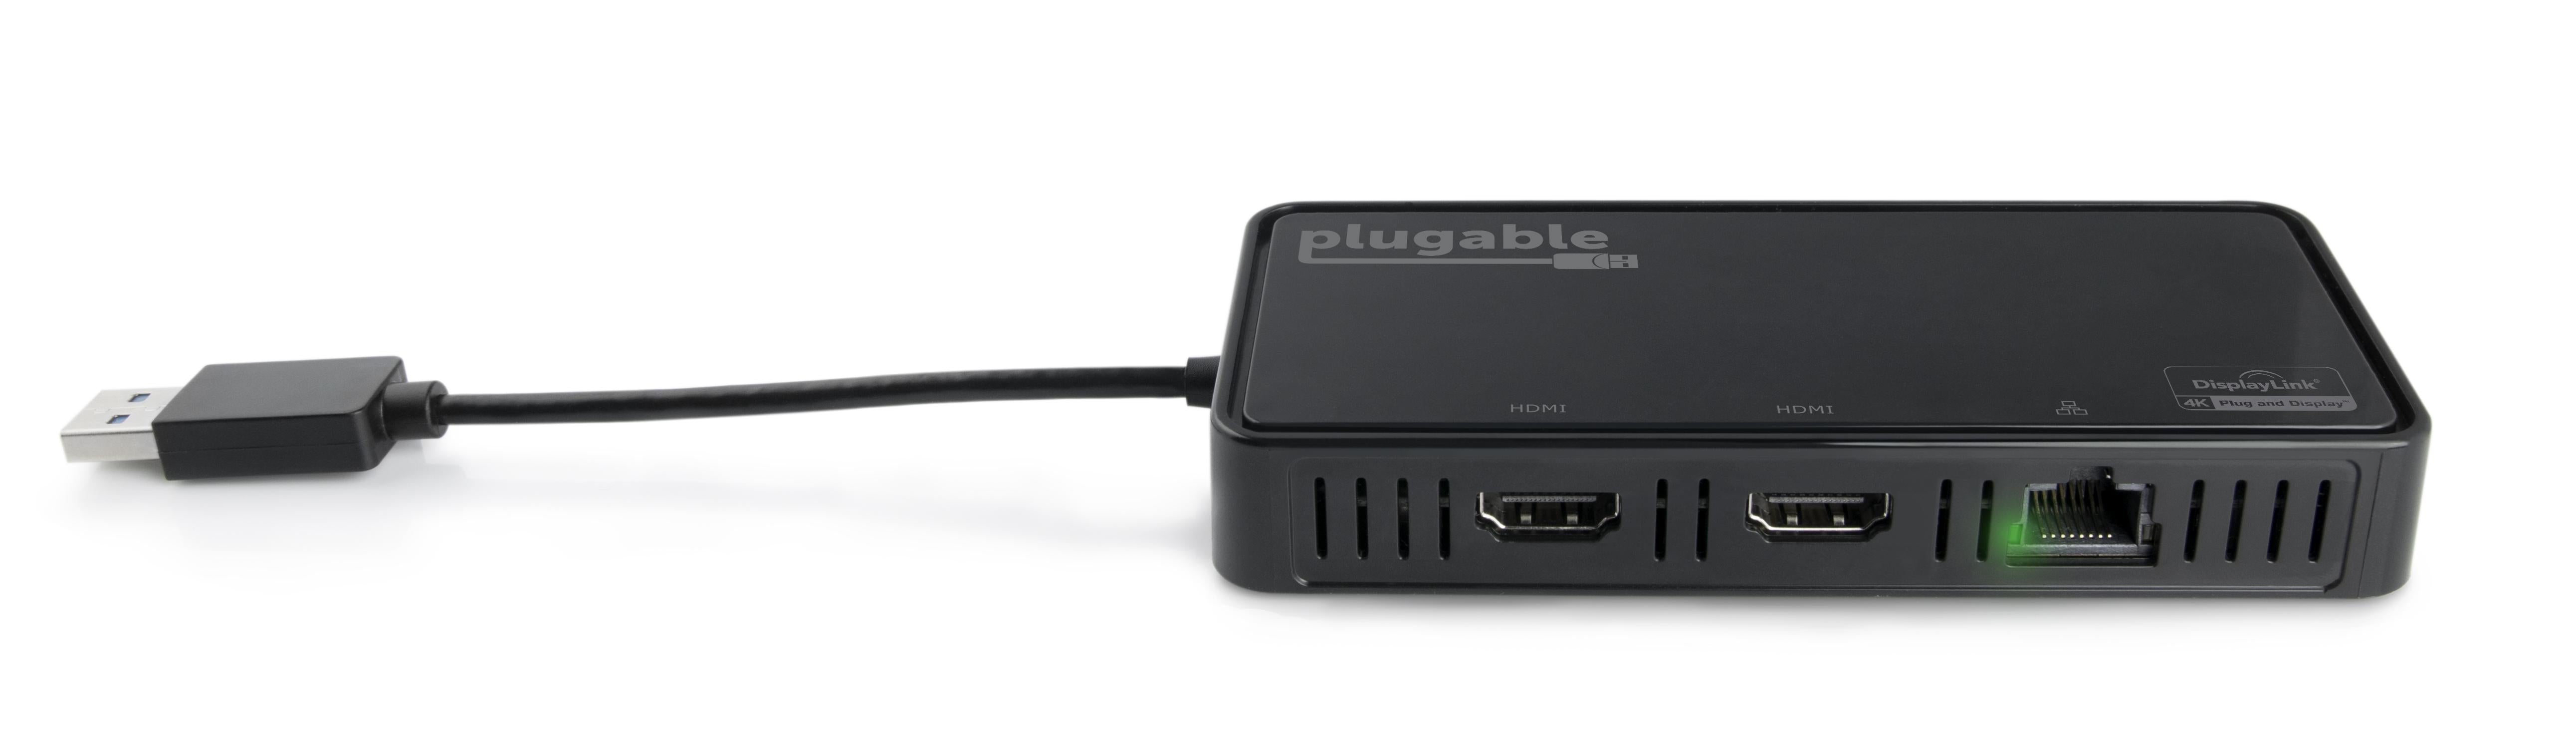 Plugable USB 3.0 Dual 4K HDMI 2.0 and Gigabit Ethernet Adapter